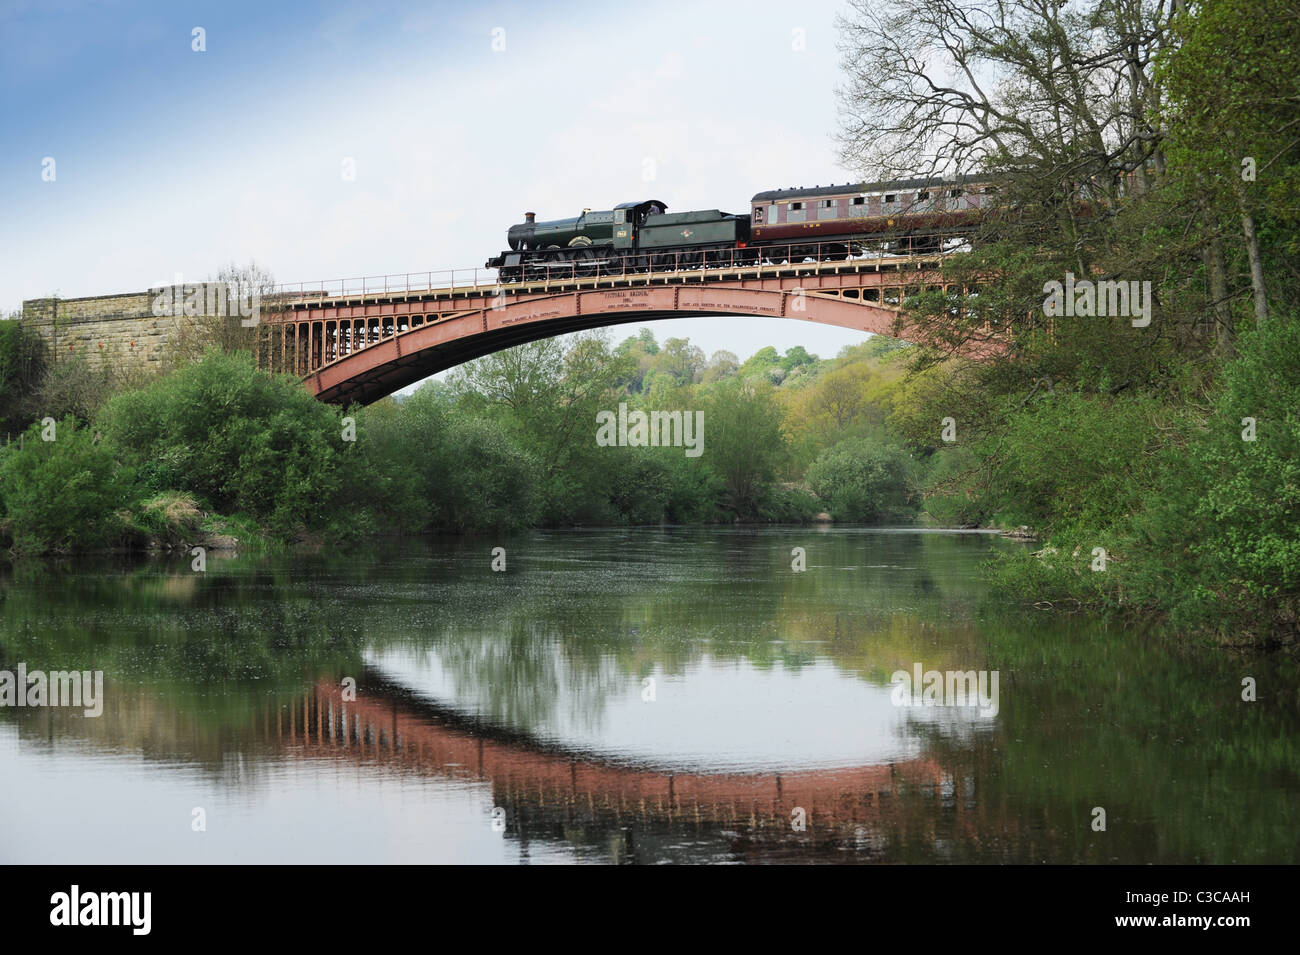 Steam Locomotive crossing Severn Valley Railway Victoria Bridge Arley in Worcestershire England Uk Stock Photo